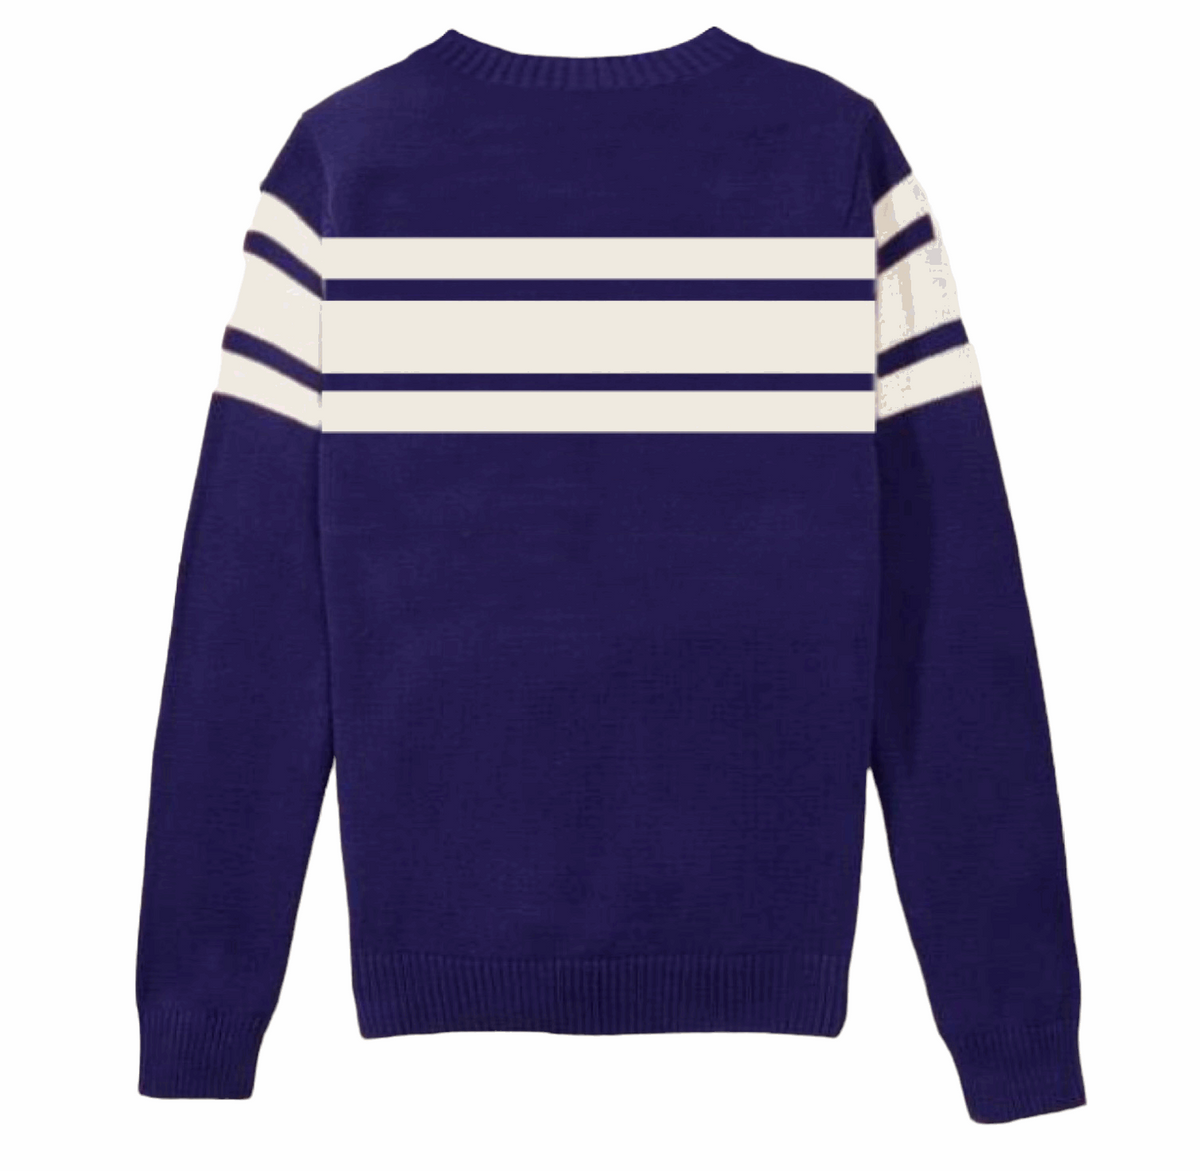 Varcity ® Club Jacquard Letterman Stripe Sweater Navy